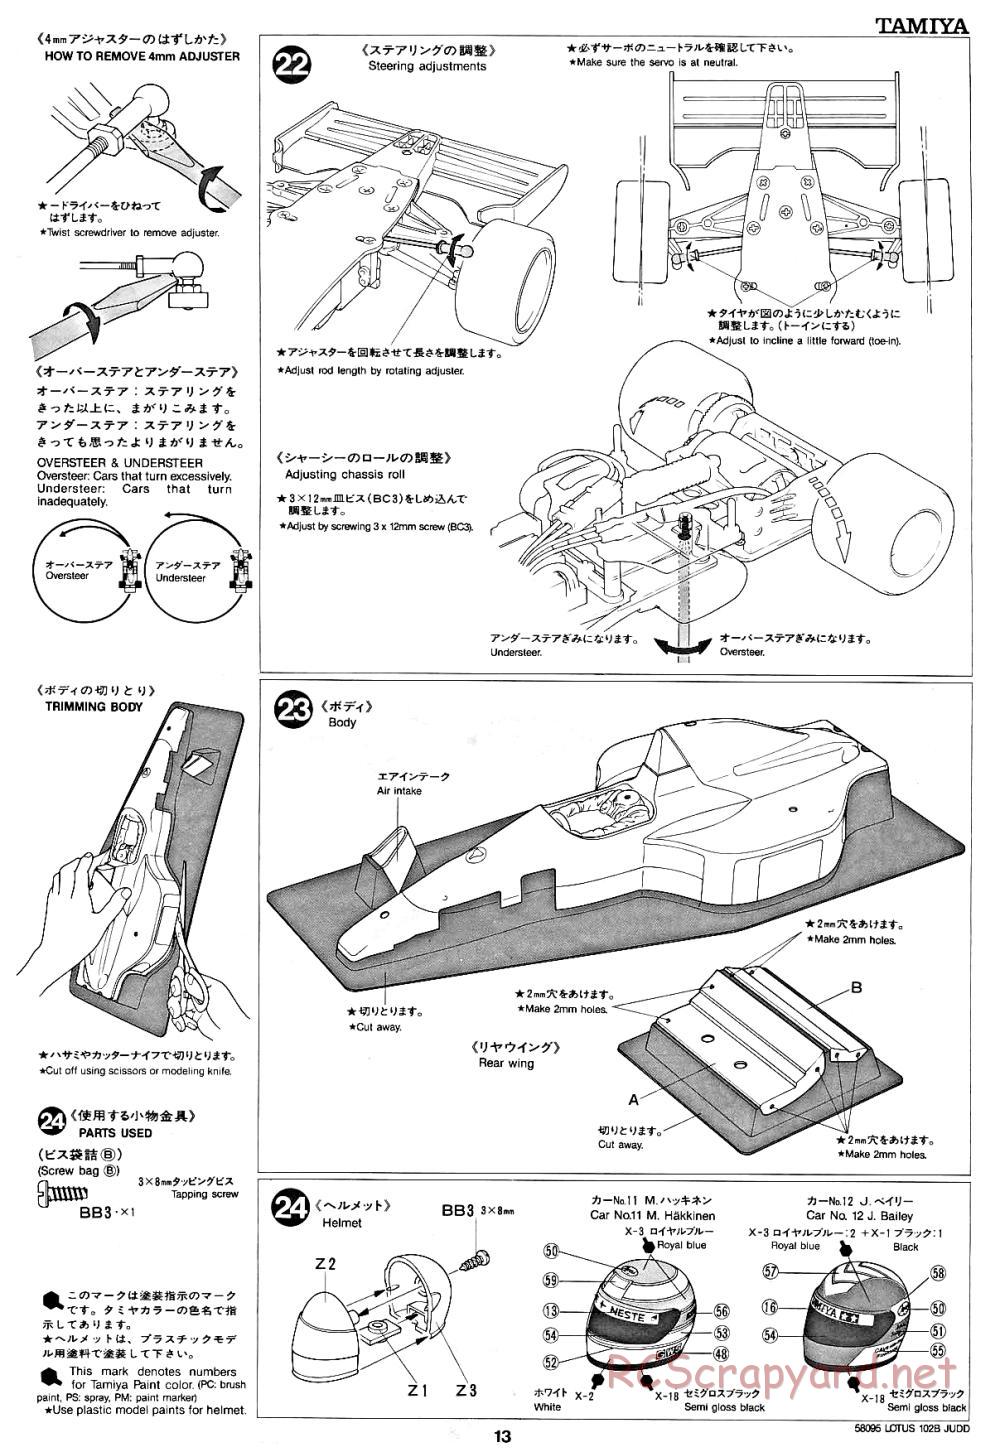 Tamiya - Lotus 102B Judd - 58095 - Manual - Page 13